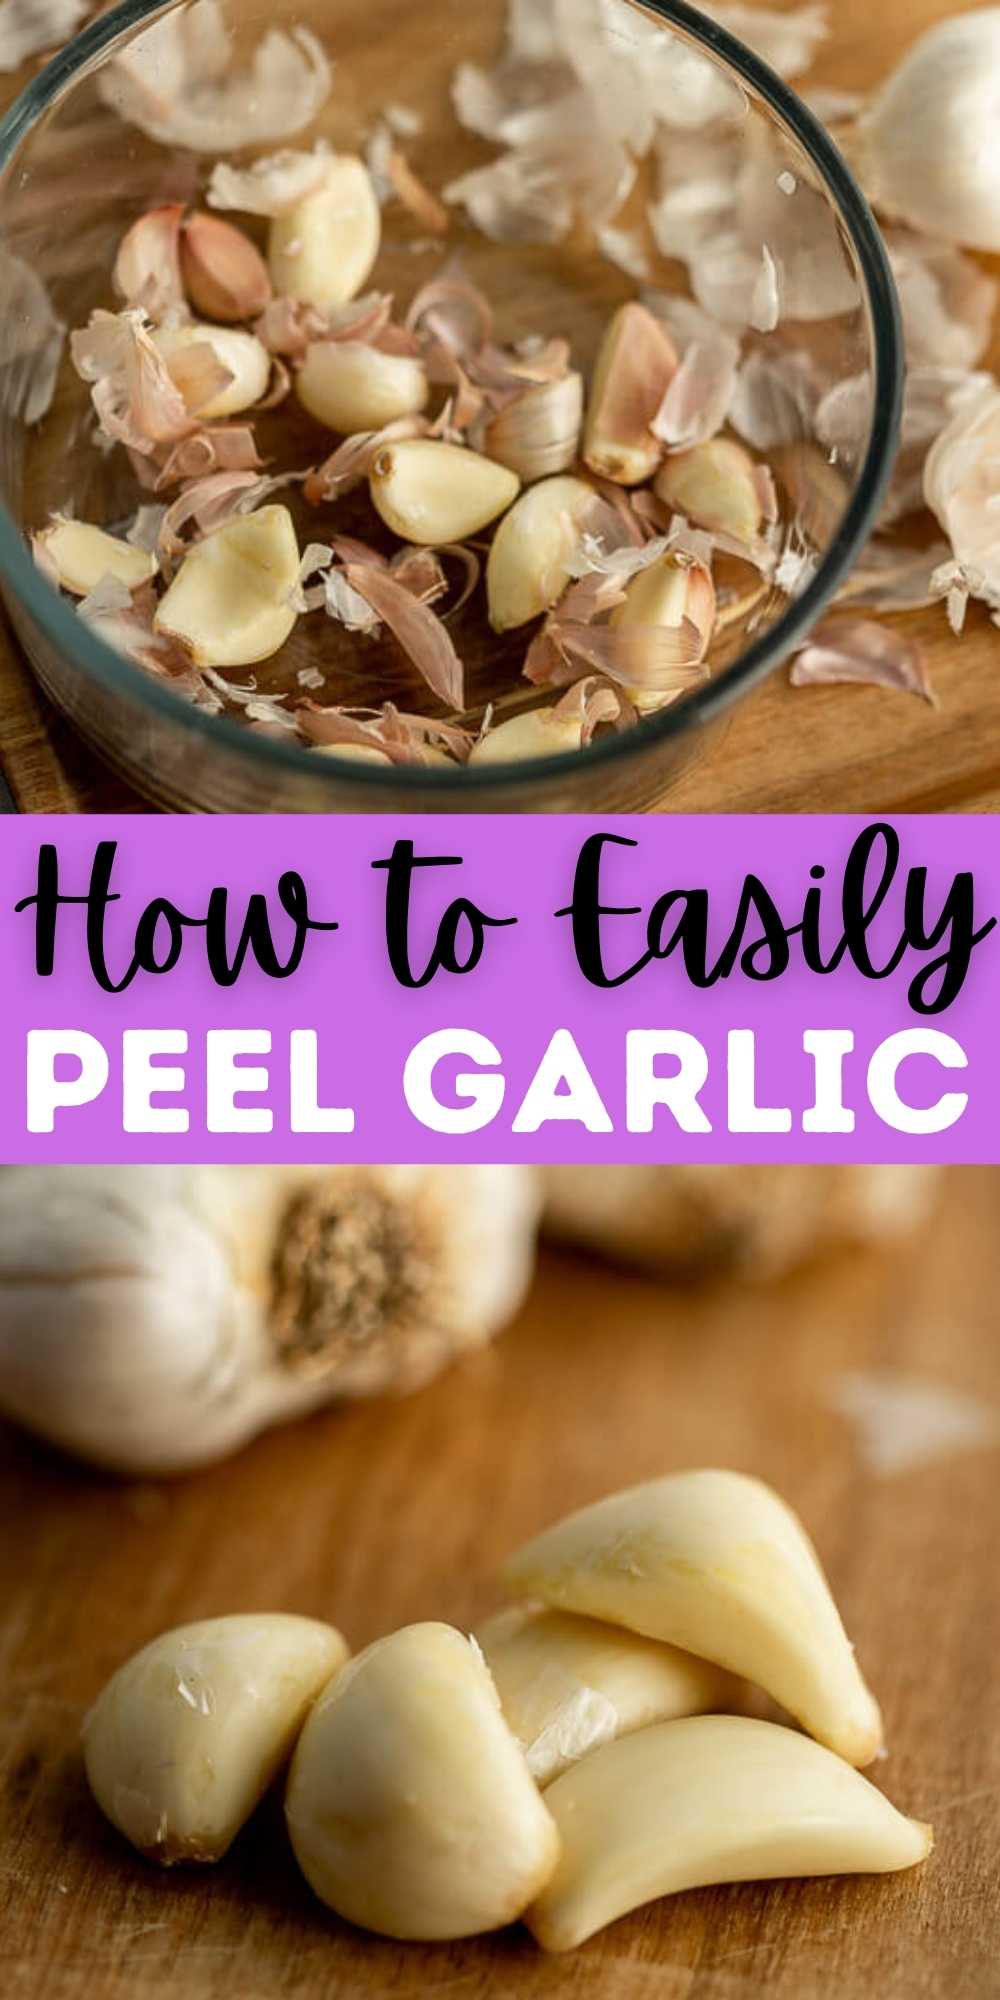 https://www.eatingonadime.com/wp-content/uploads/2022/01/How-to-Peel-Garlic-Pin-3.jpg